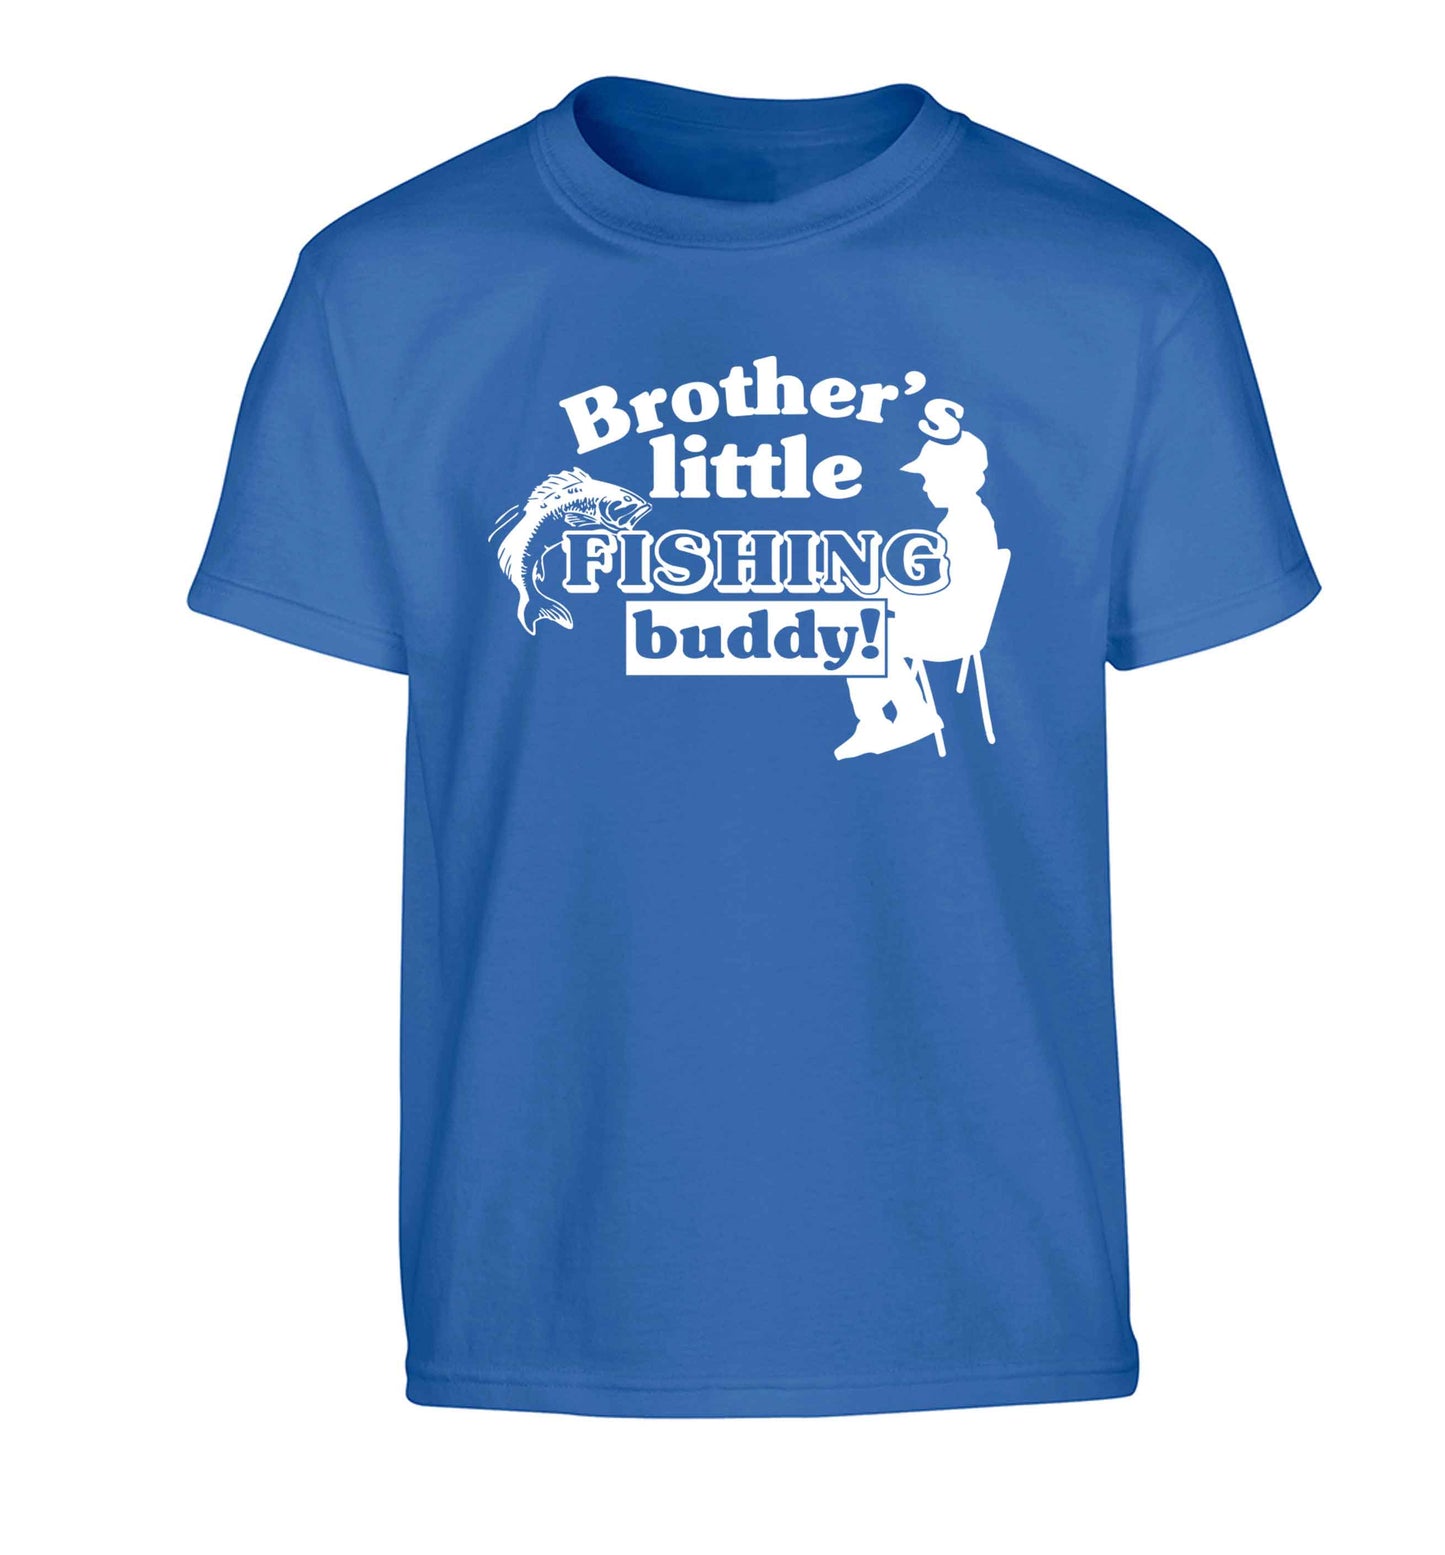 Brother's little fishing buddy Children's blue Tshirt 12-13 Years